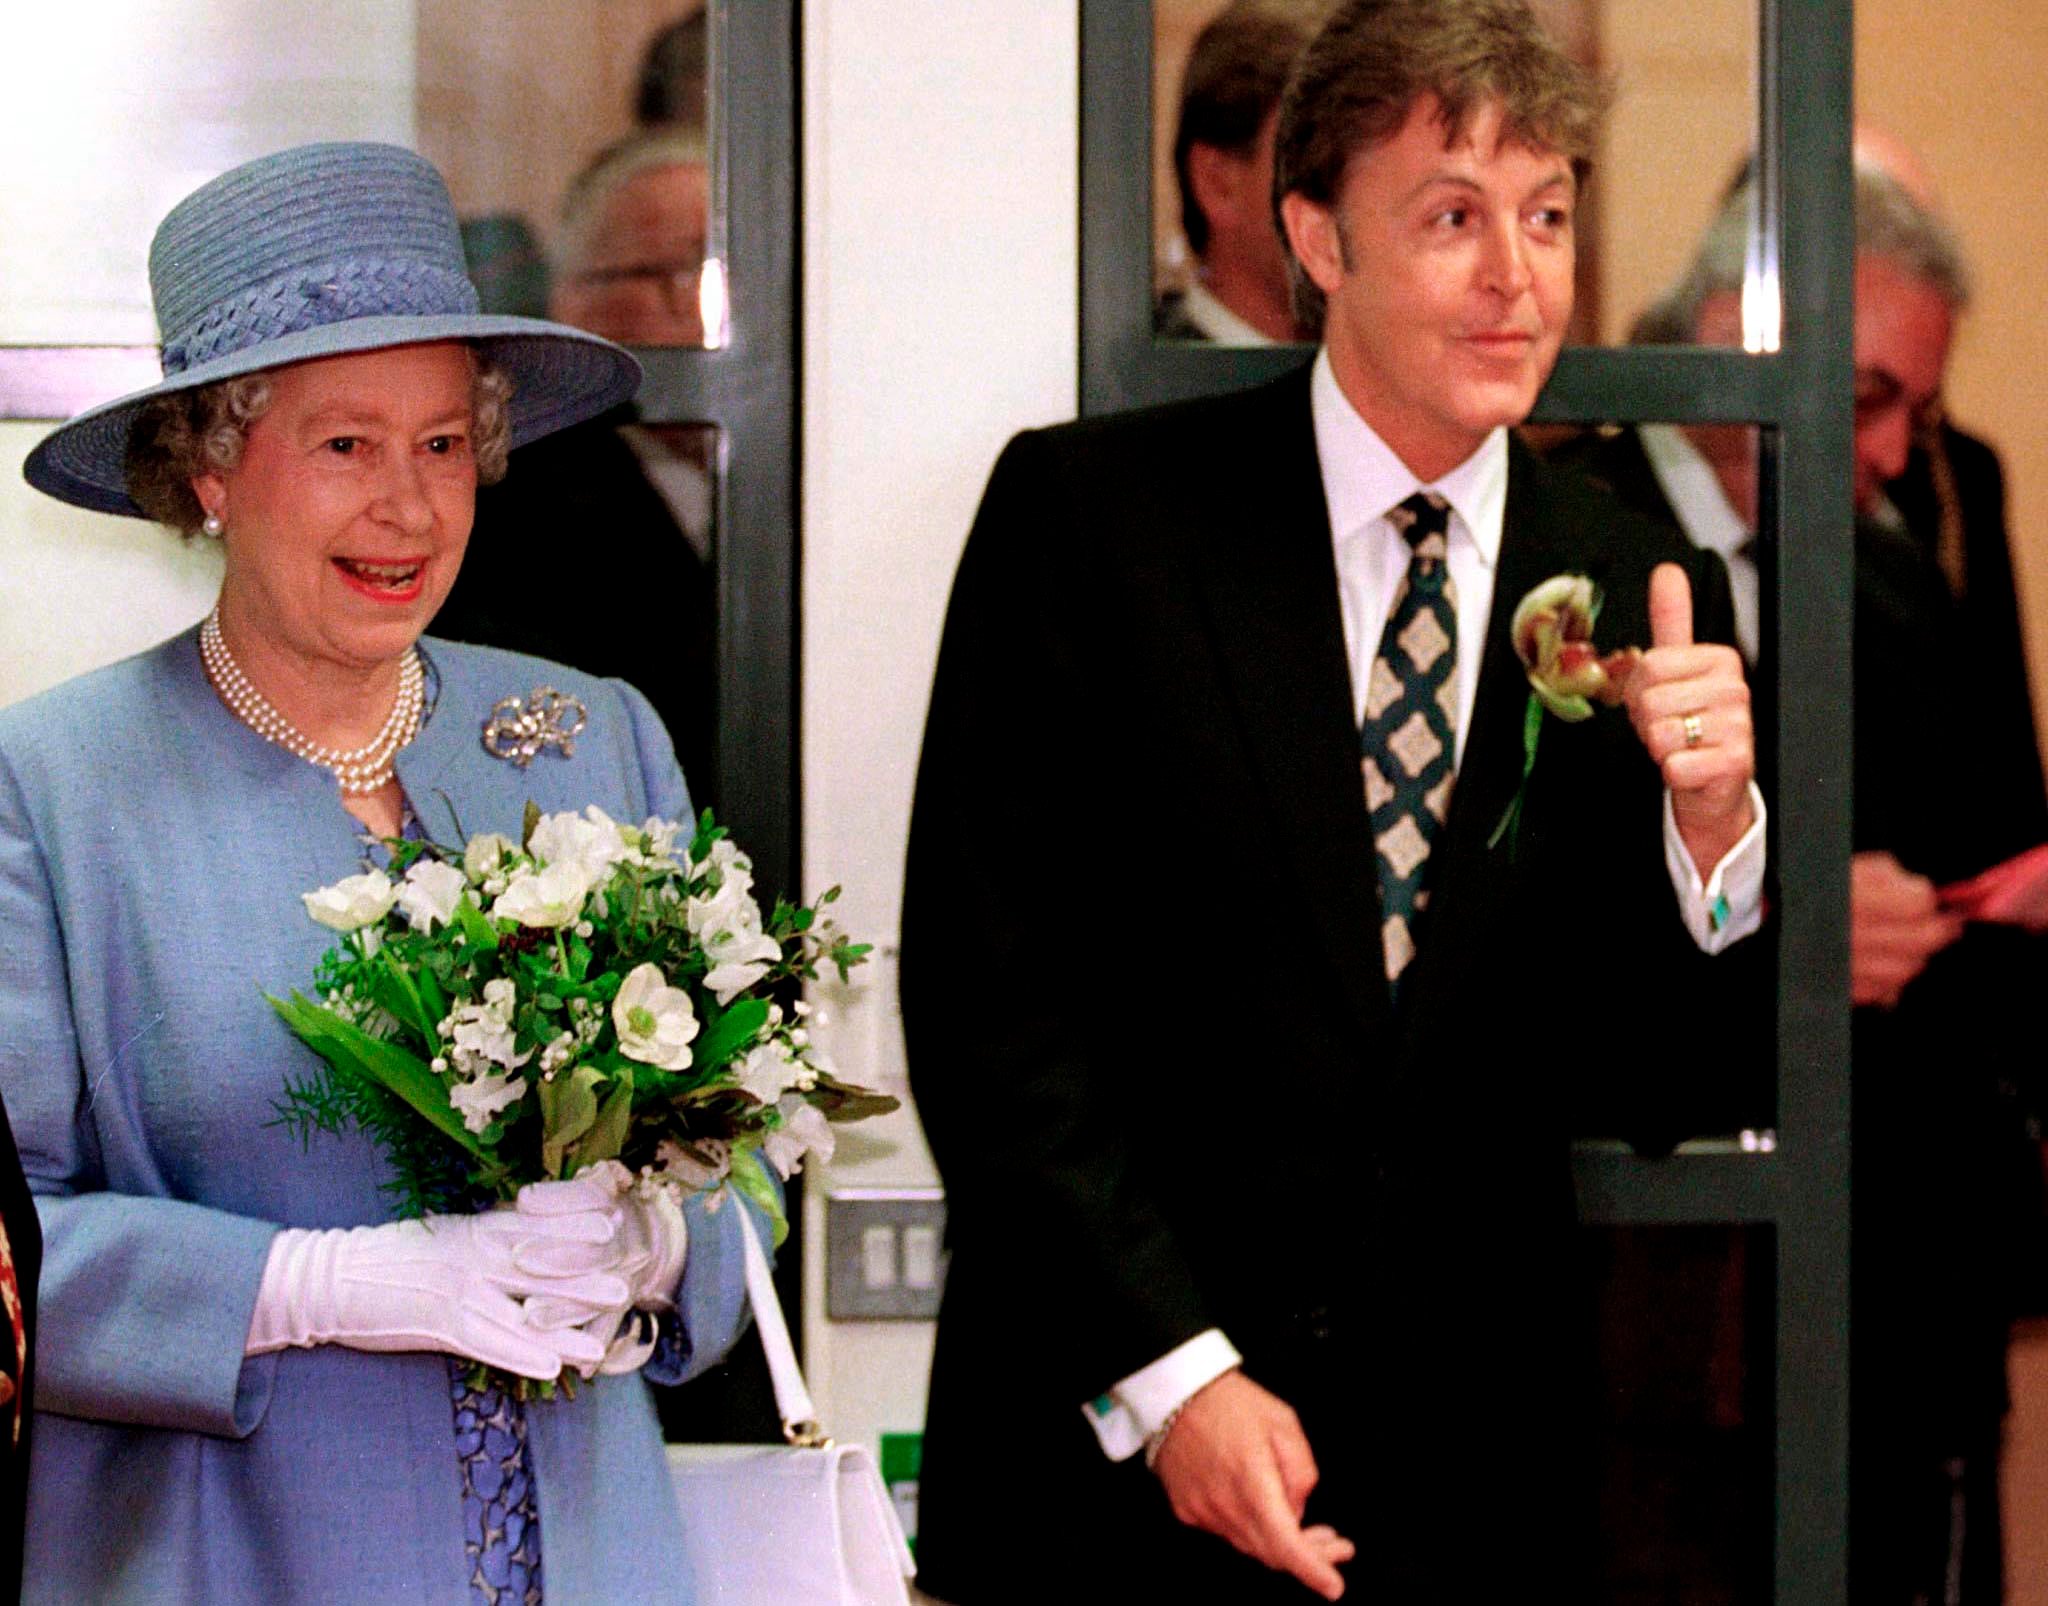 Queen Elizabeth II holding flowers and Paul McCartney wearing a suit